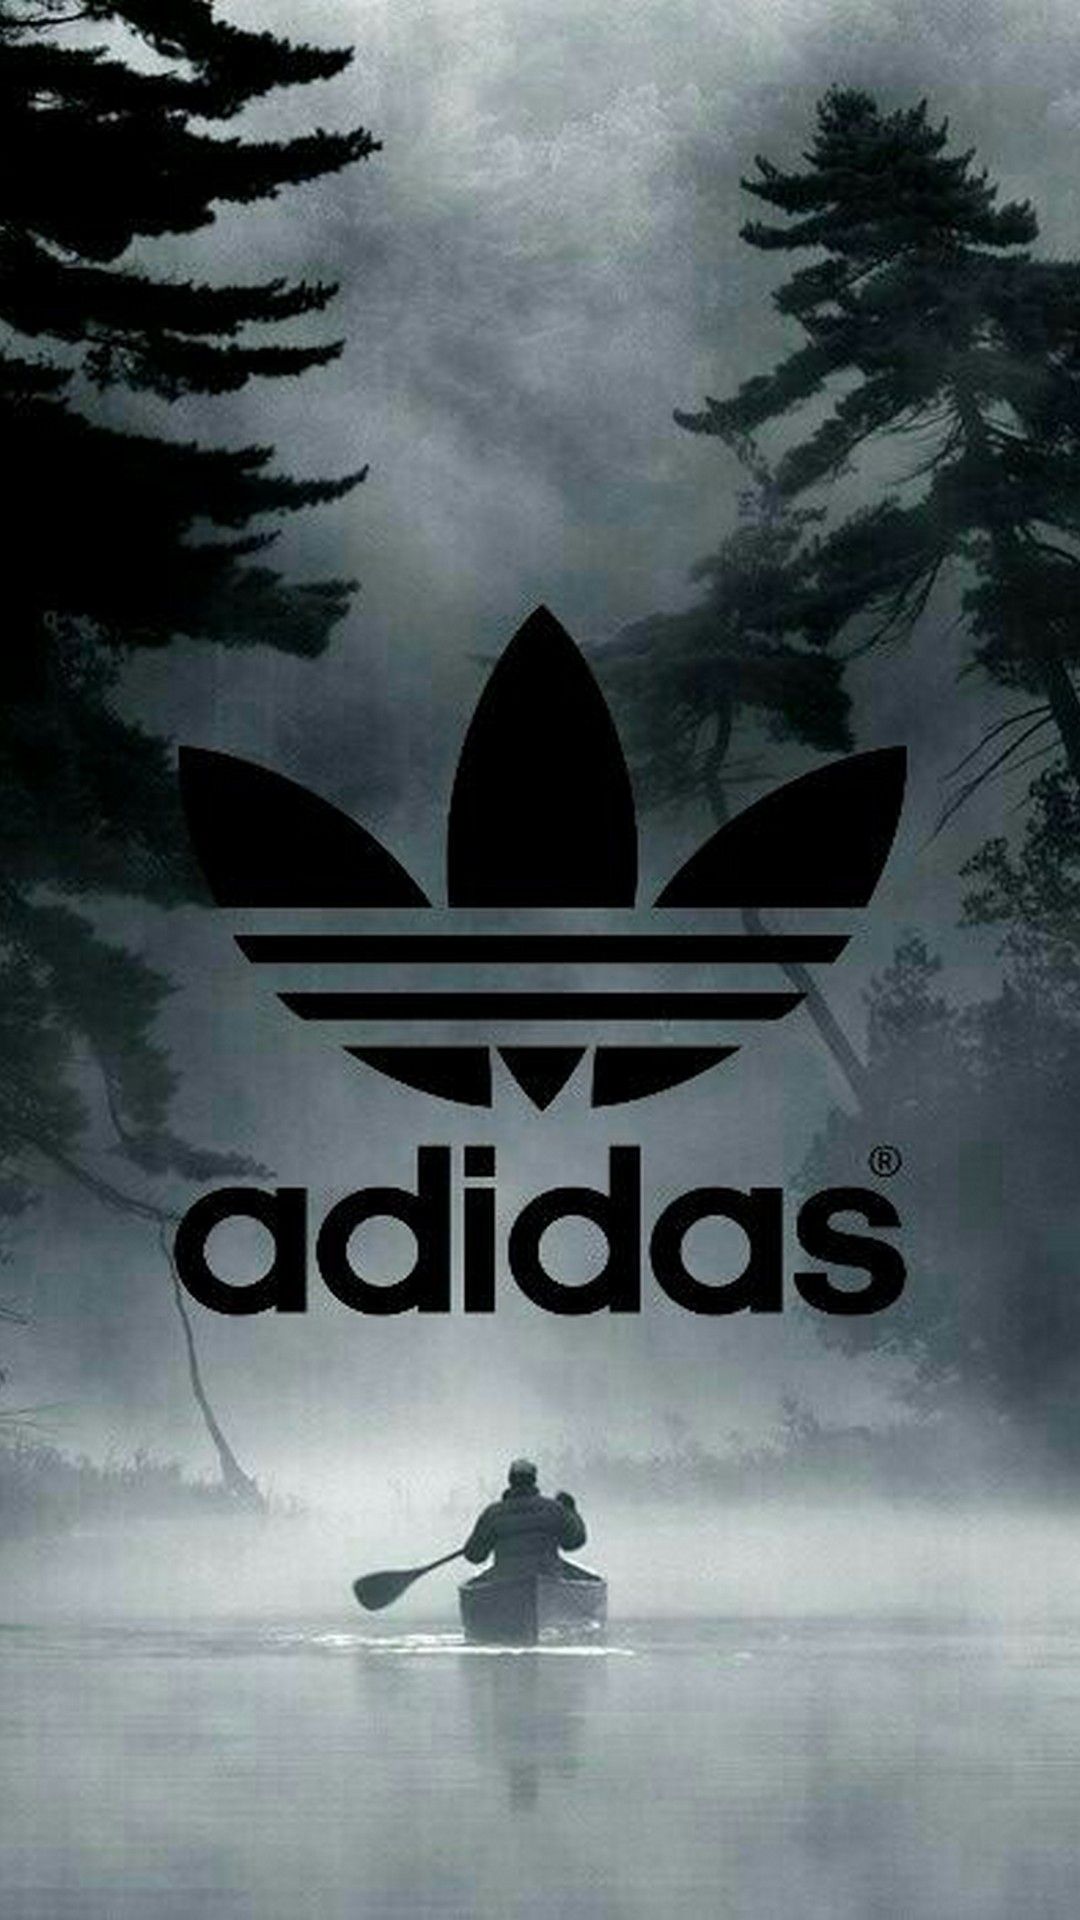 Adidas Logo Wallpaper Android Android Wallpaper